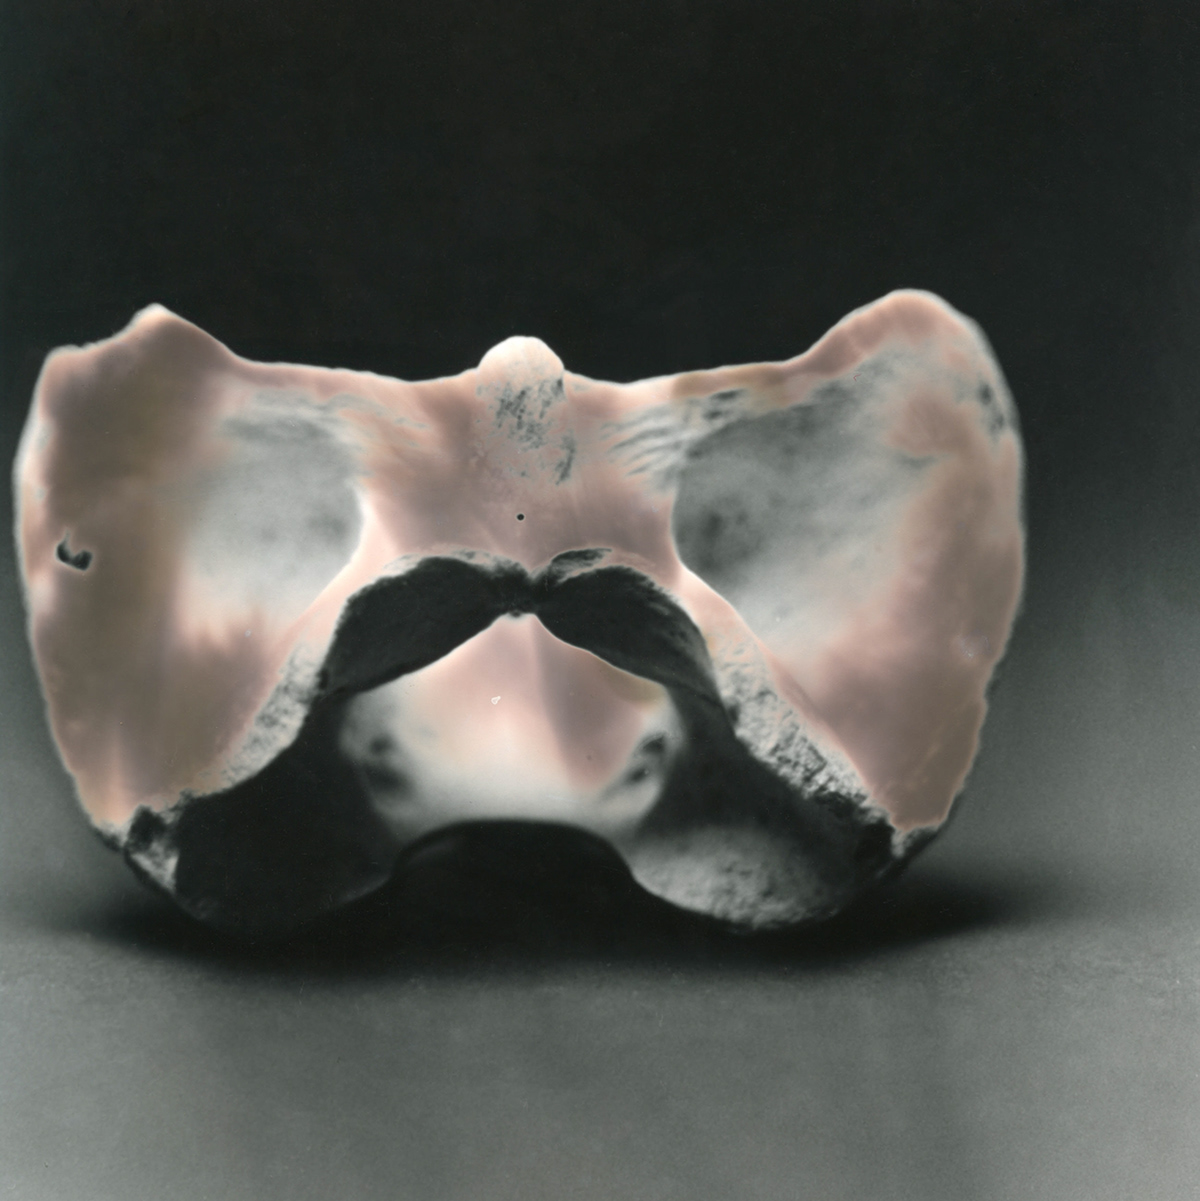 chromoskedasic sebatier film photography bones black and white